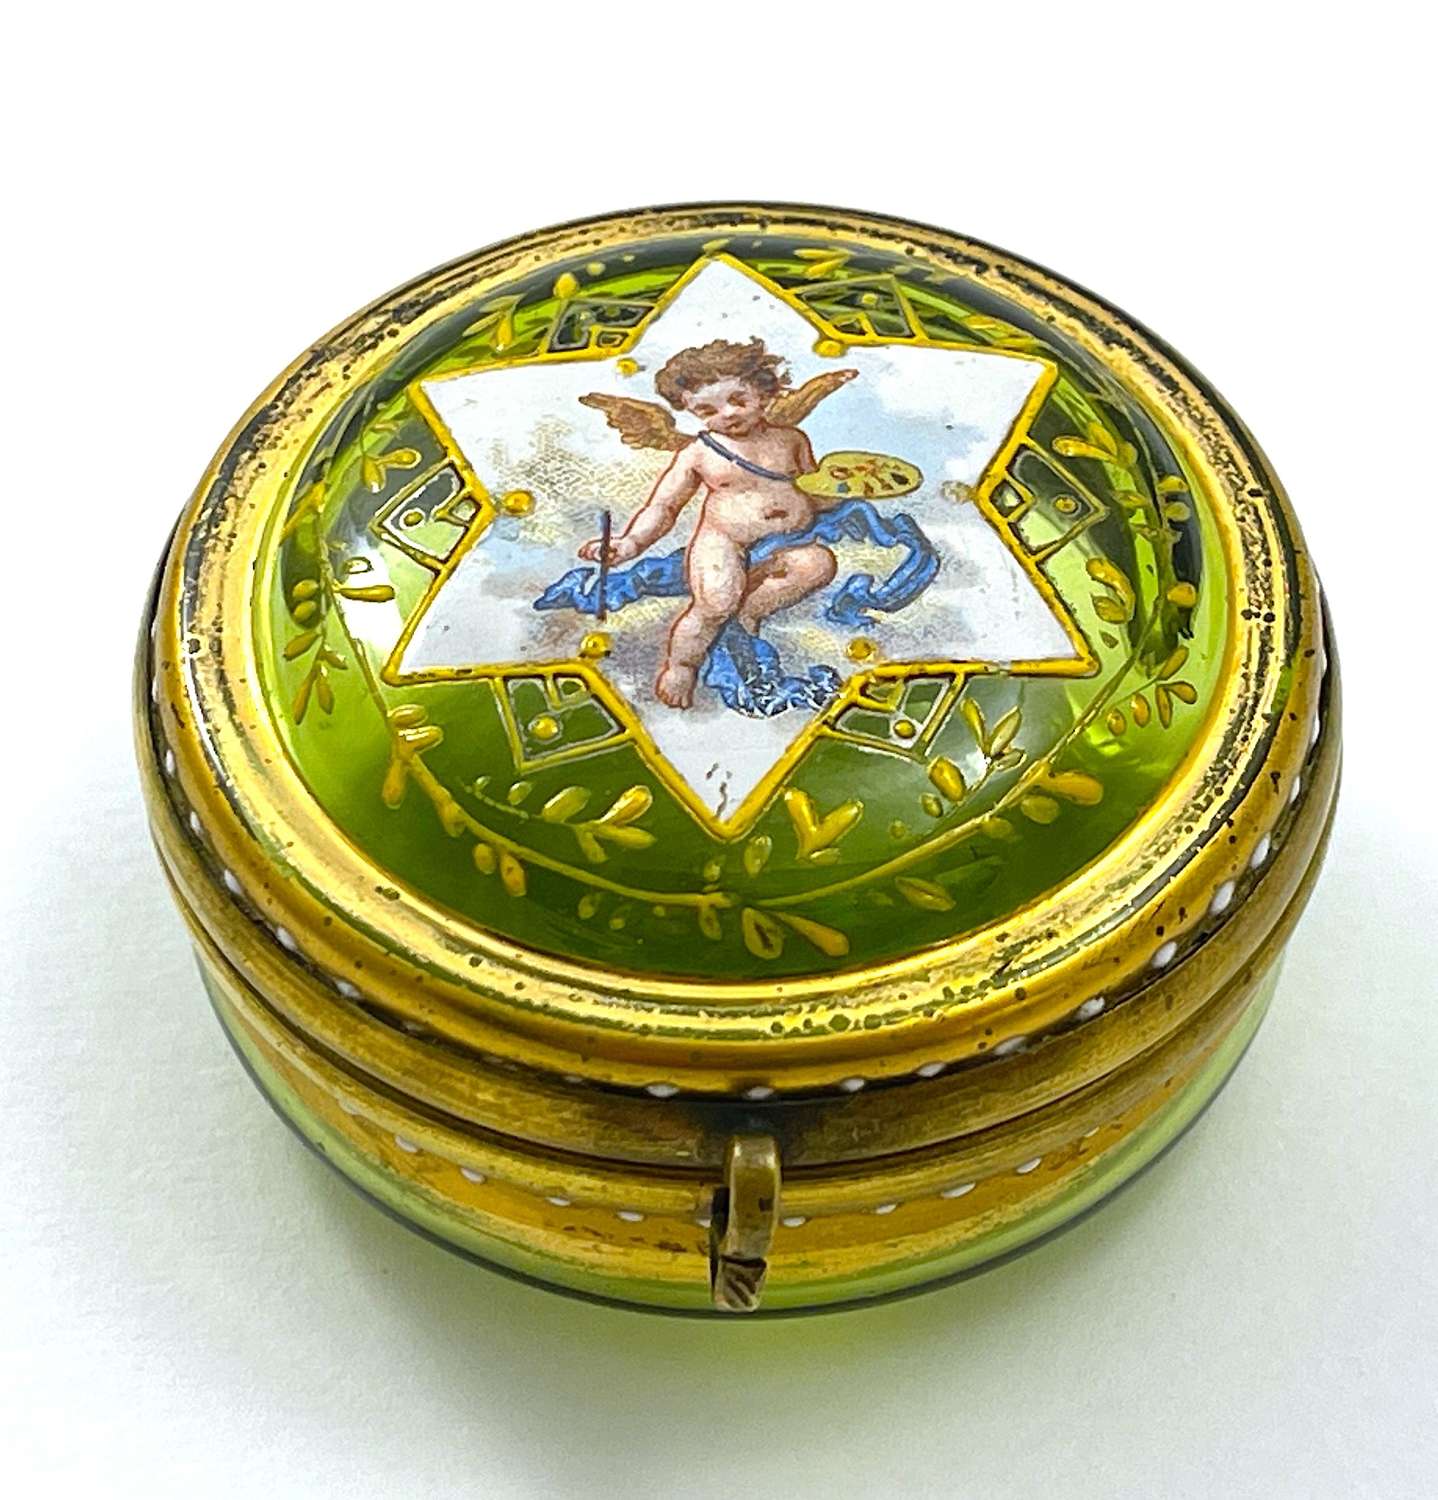 Antique Miniature Glass Pill Box with Cherub